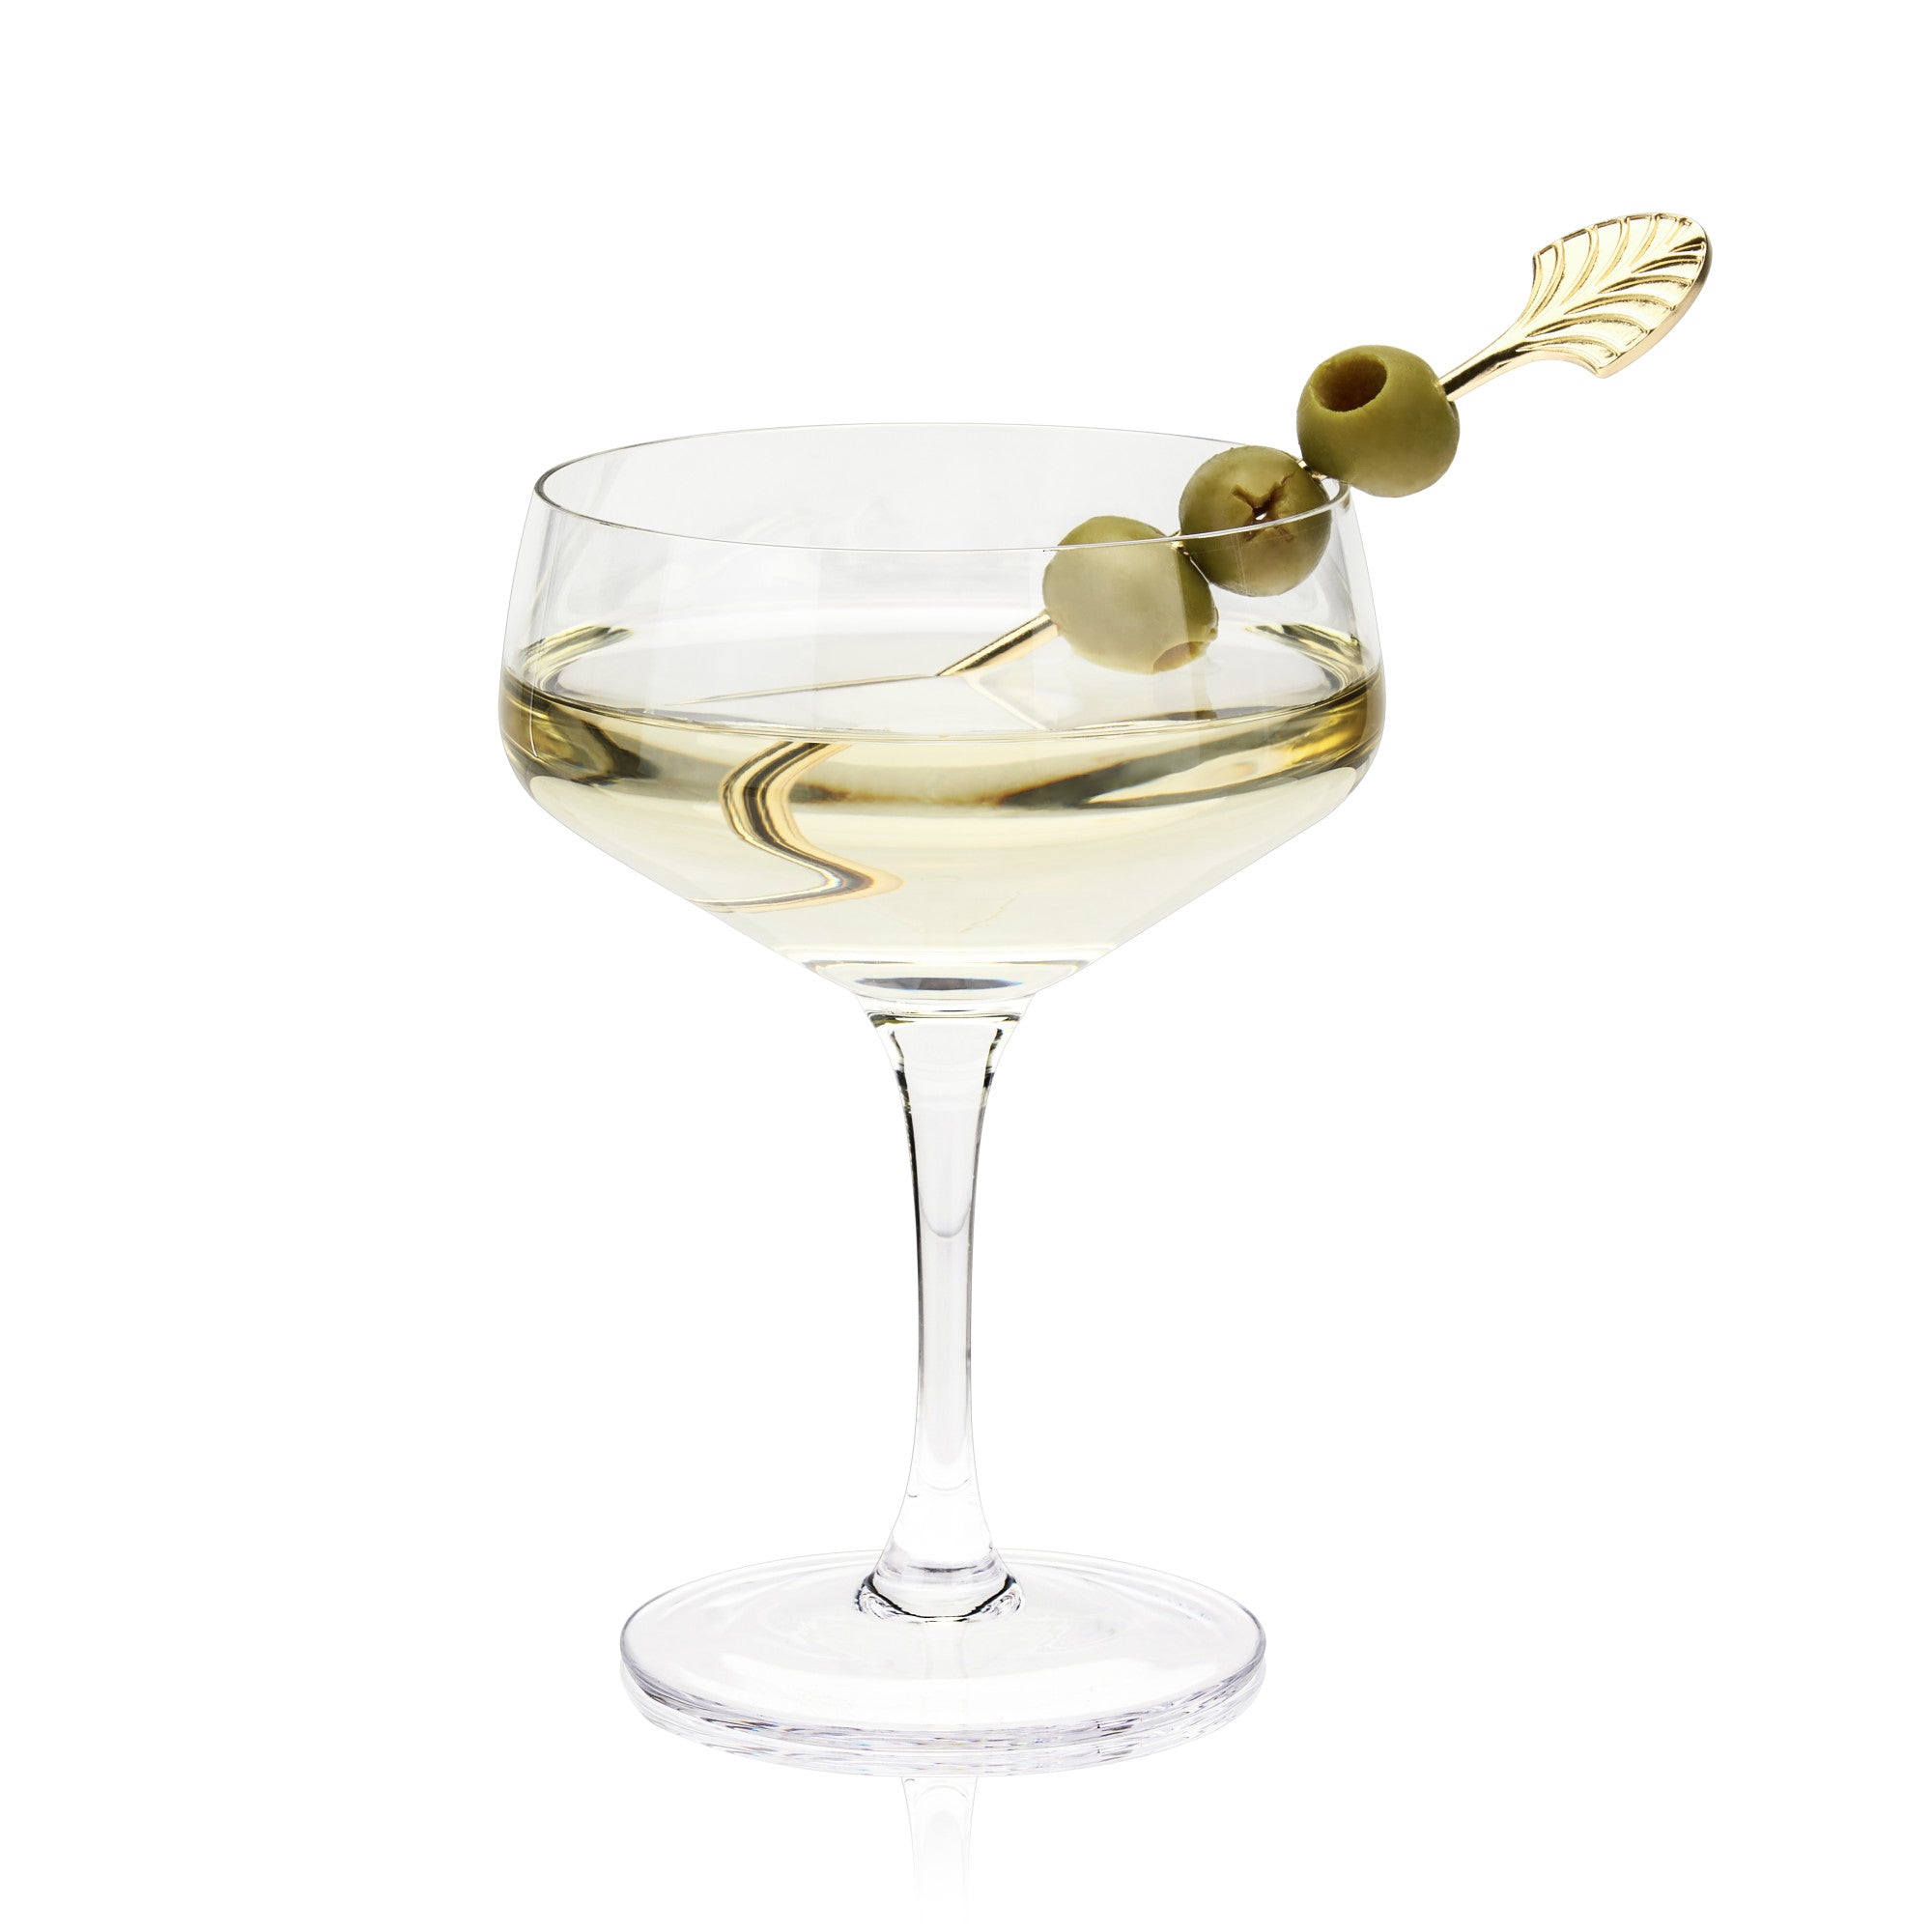 Gold Art Deco Cocktail Picks by Viski® (9487)